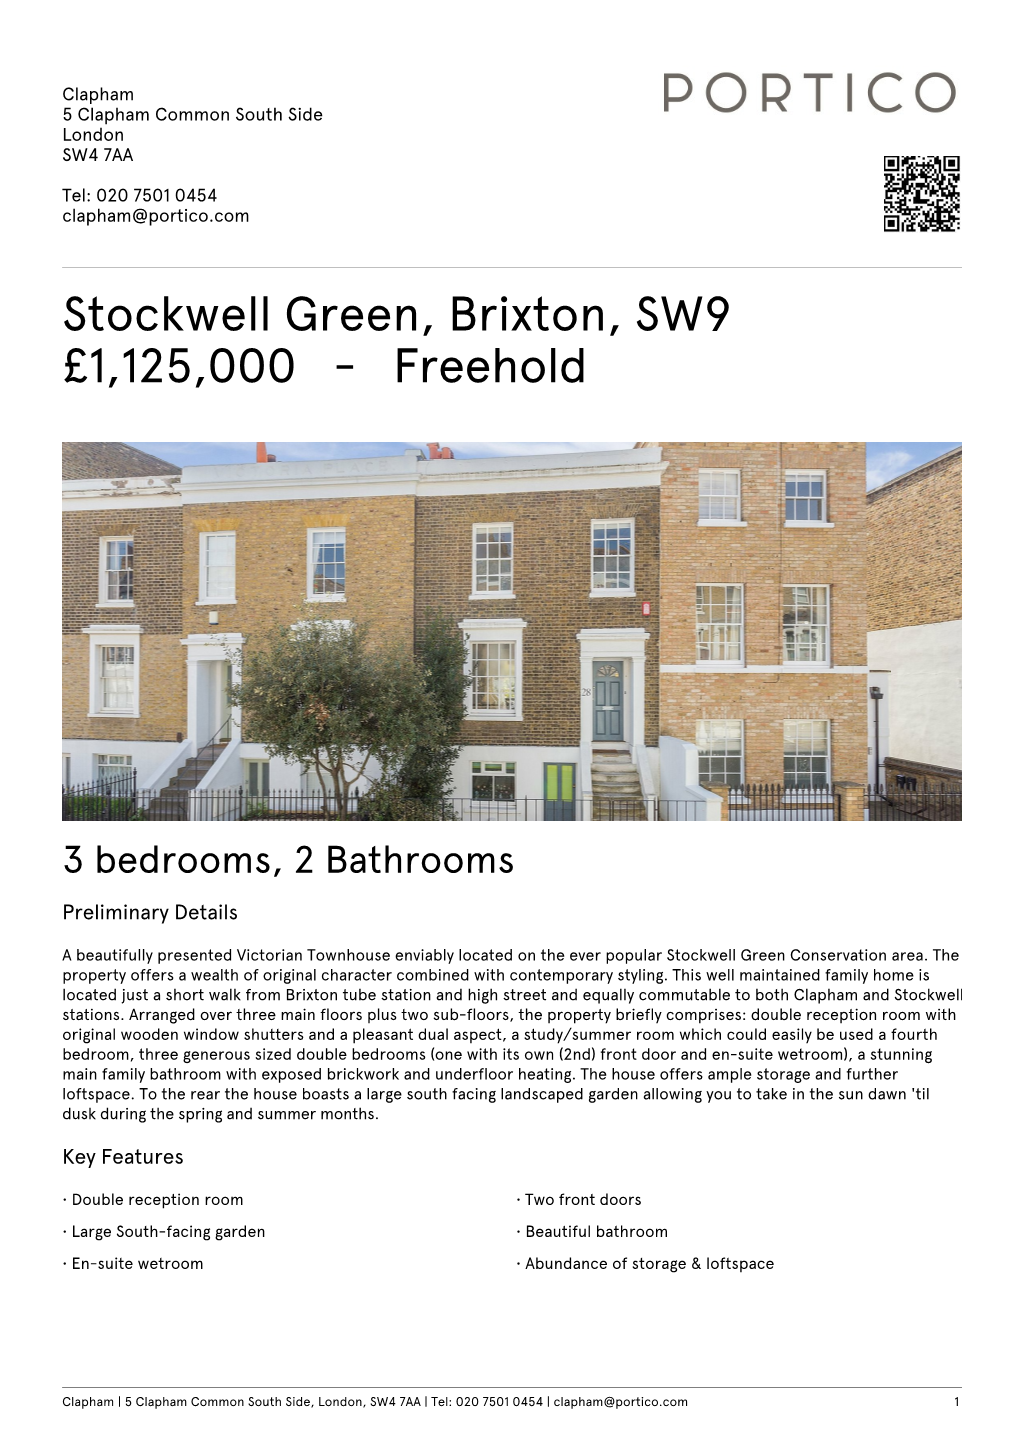 Stockwell Green, Brixton, SW9 £1125000